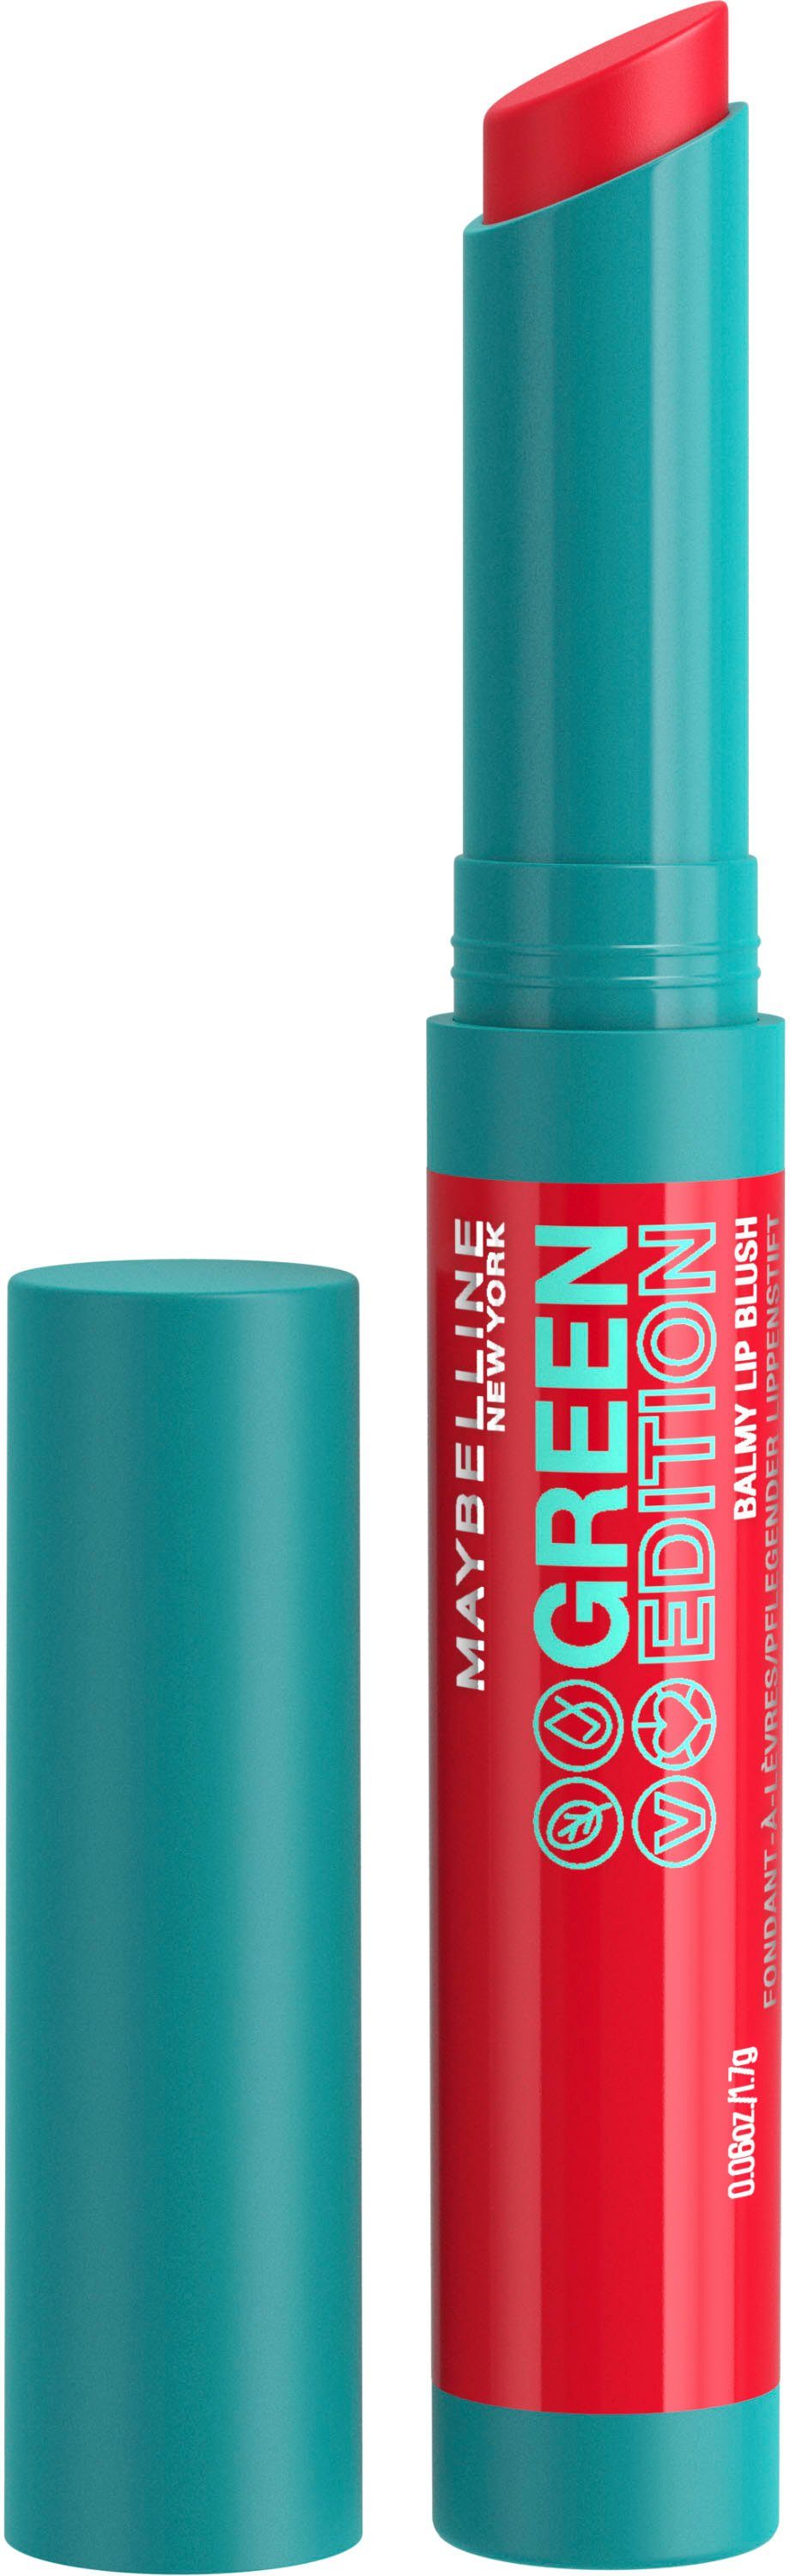 Lip Edition Blush Balmy NEW 004 Green Lippenstift YORK Flare MAYBELLINE